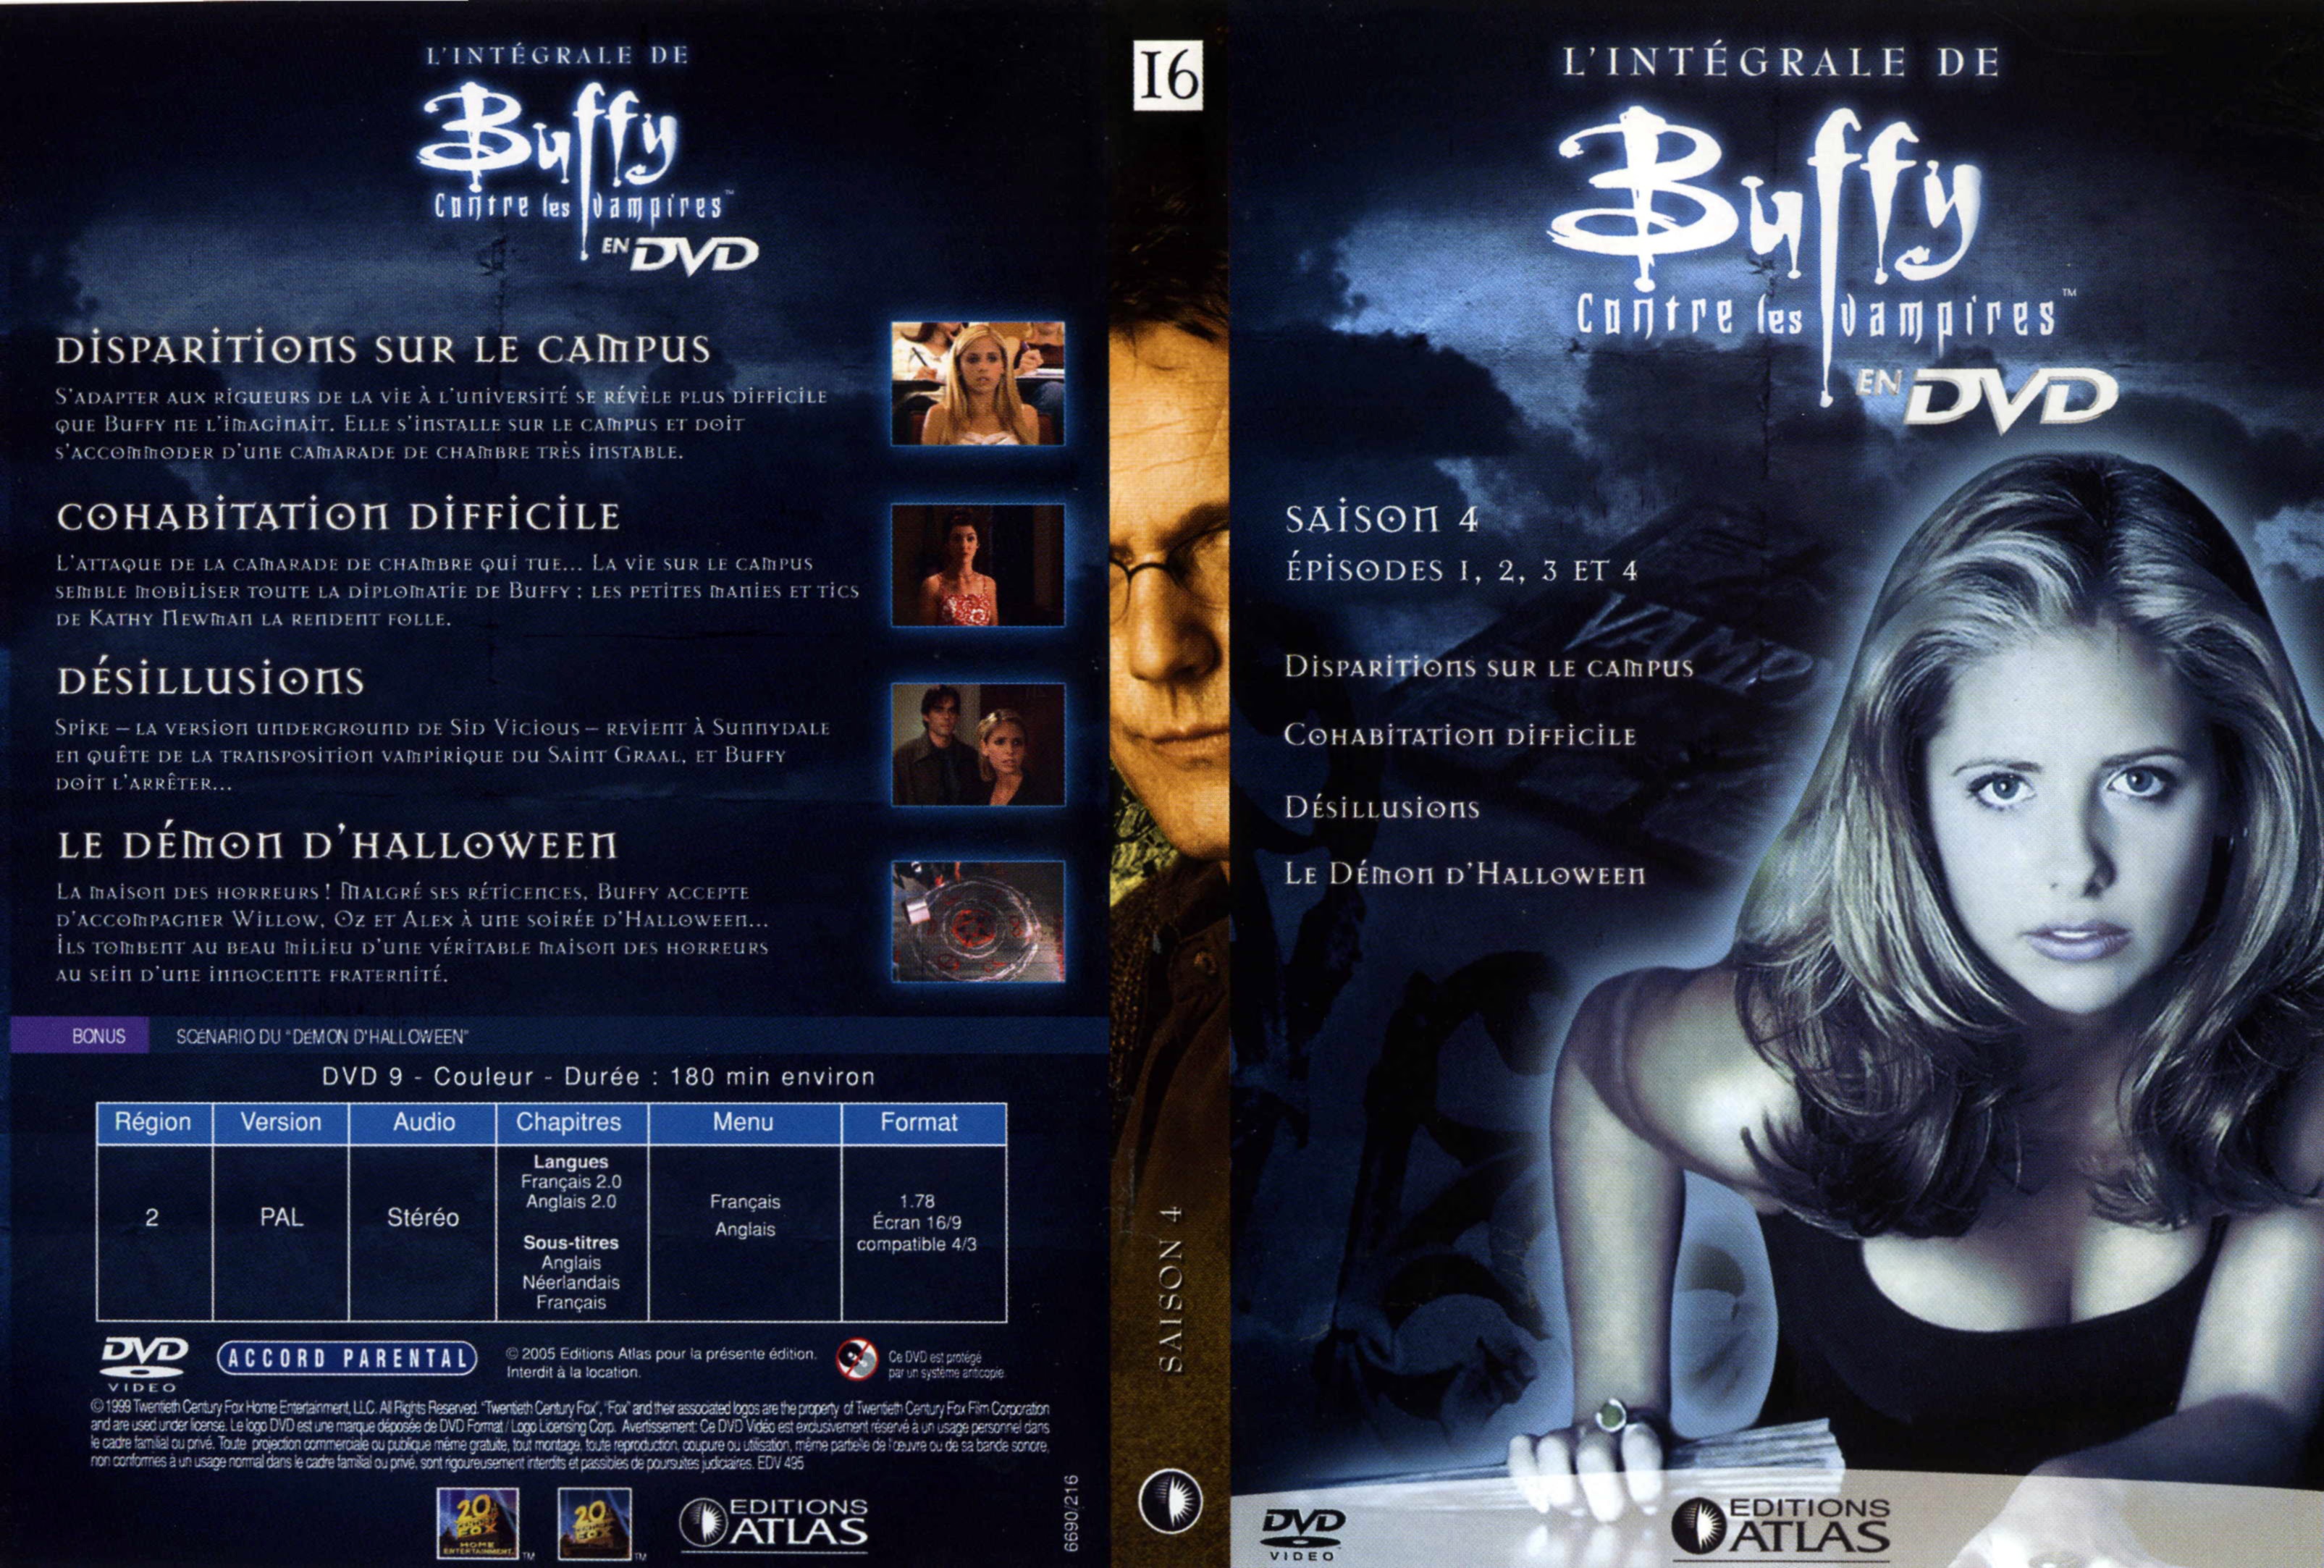 Jaquette DVD Buffy contre les vampires DVD 16 Ed Atlas